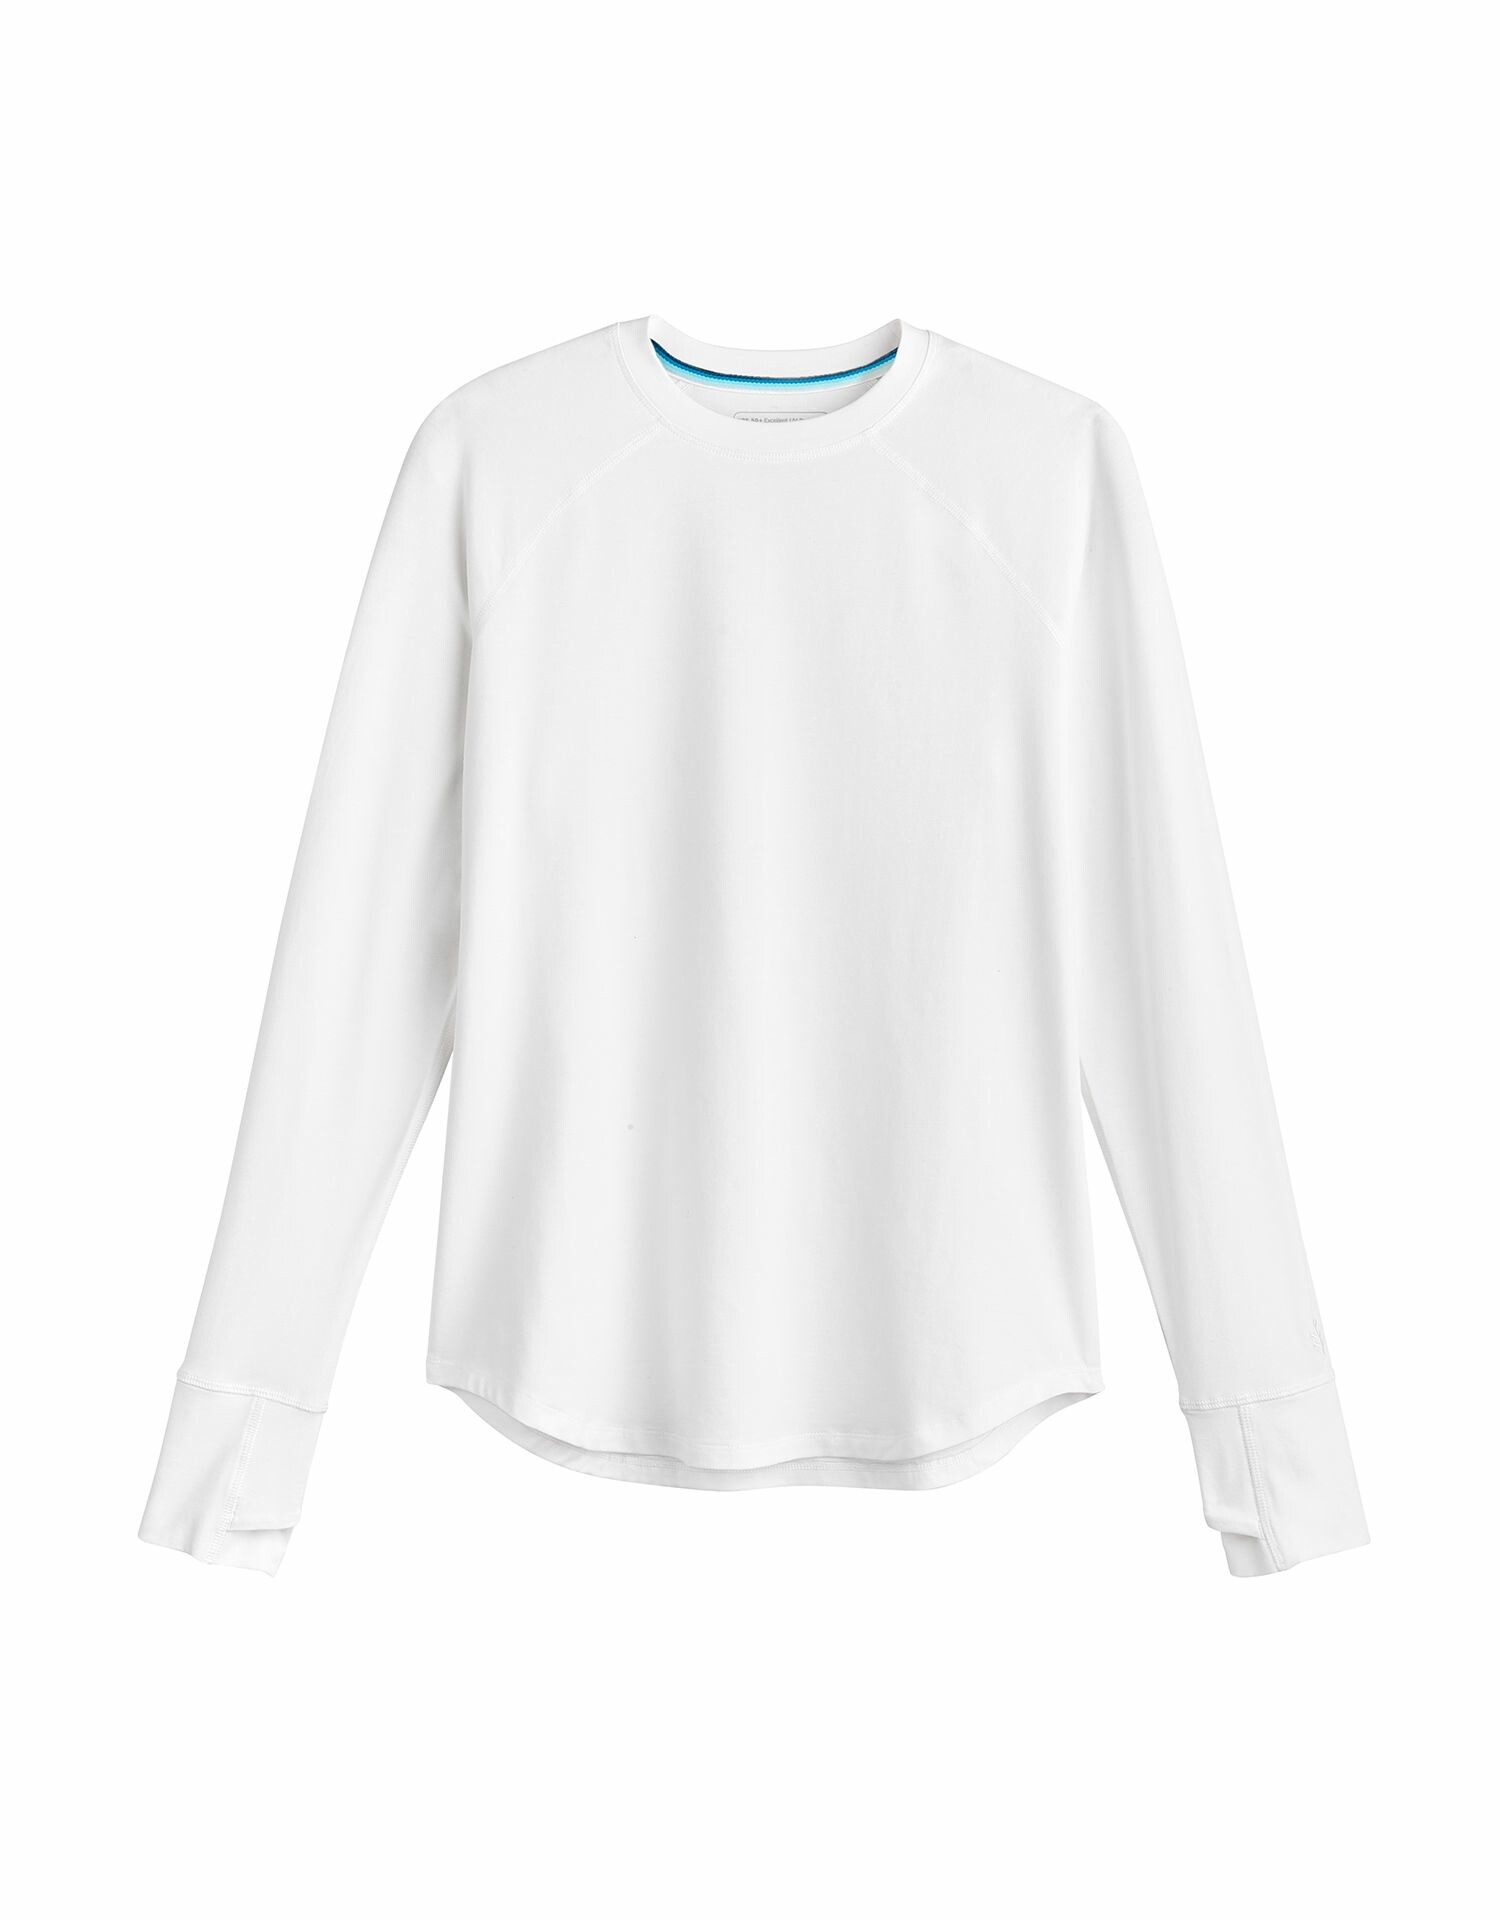 Coolibar - UV Swim Shirt for women - Hokulani Ruche - Solid - Navy